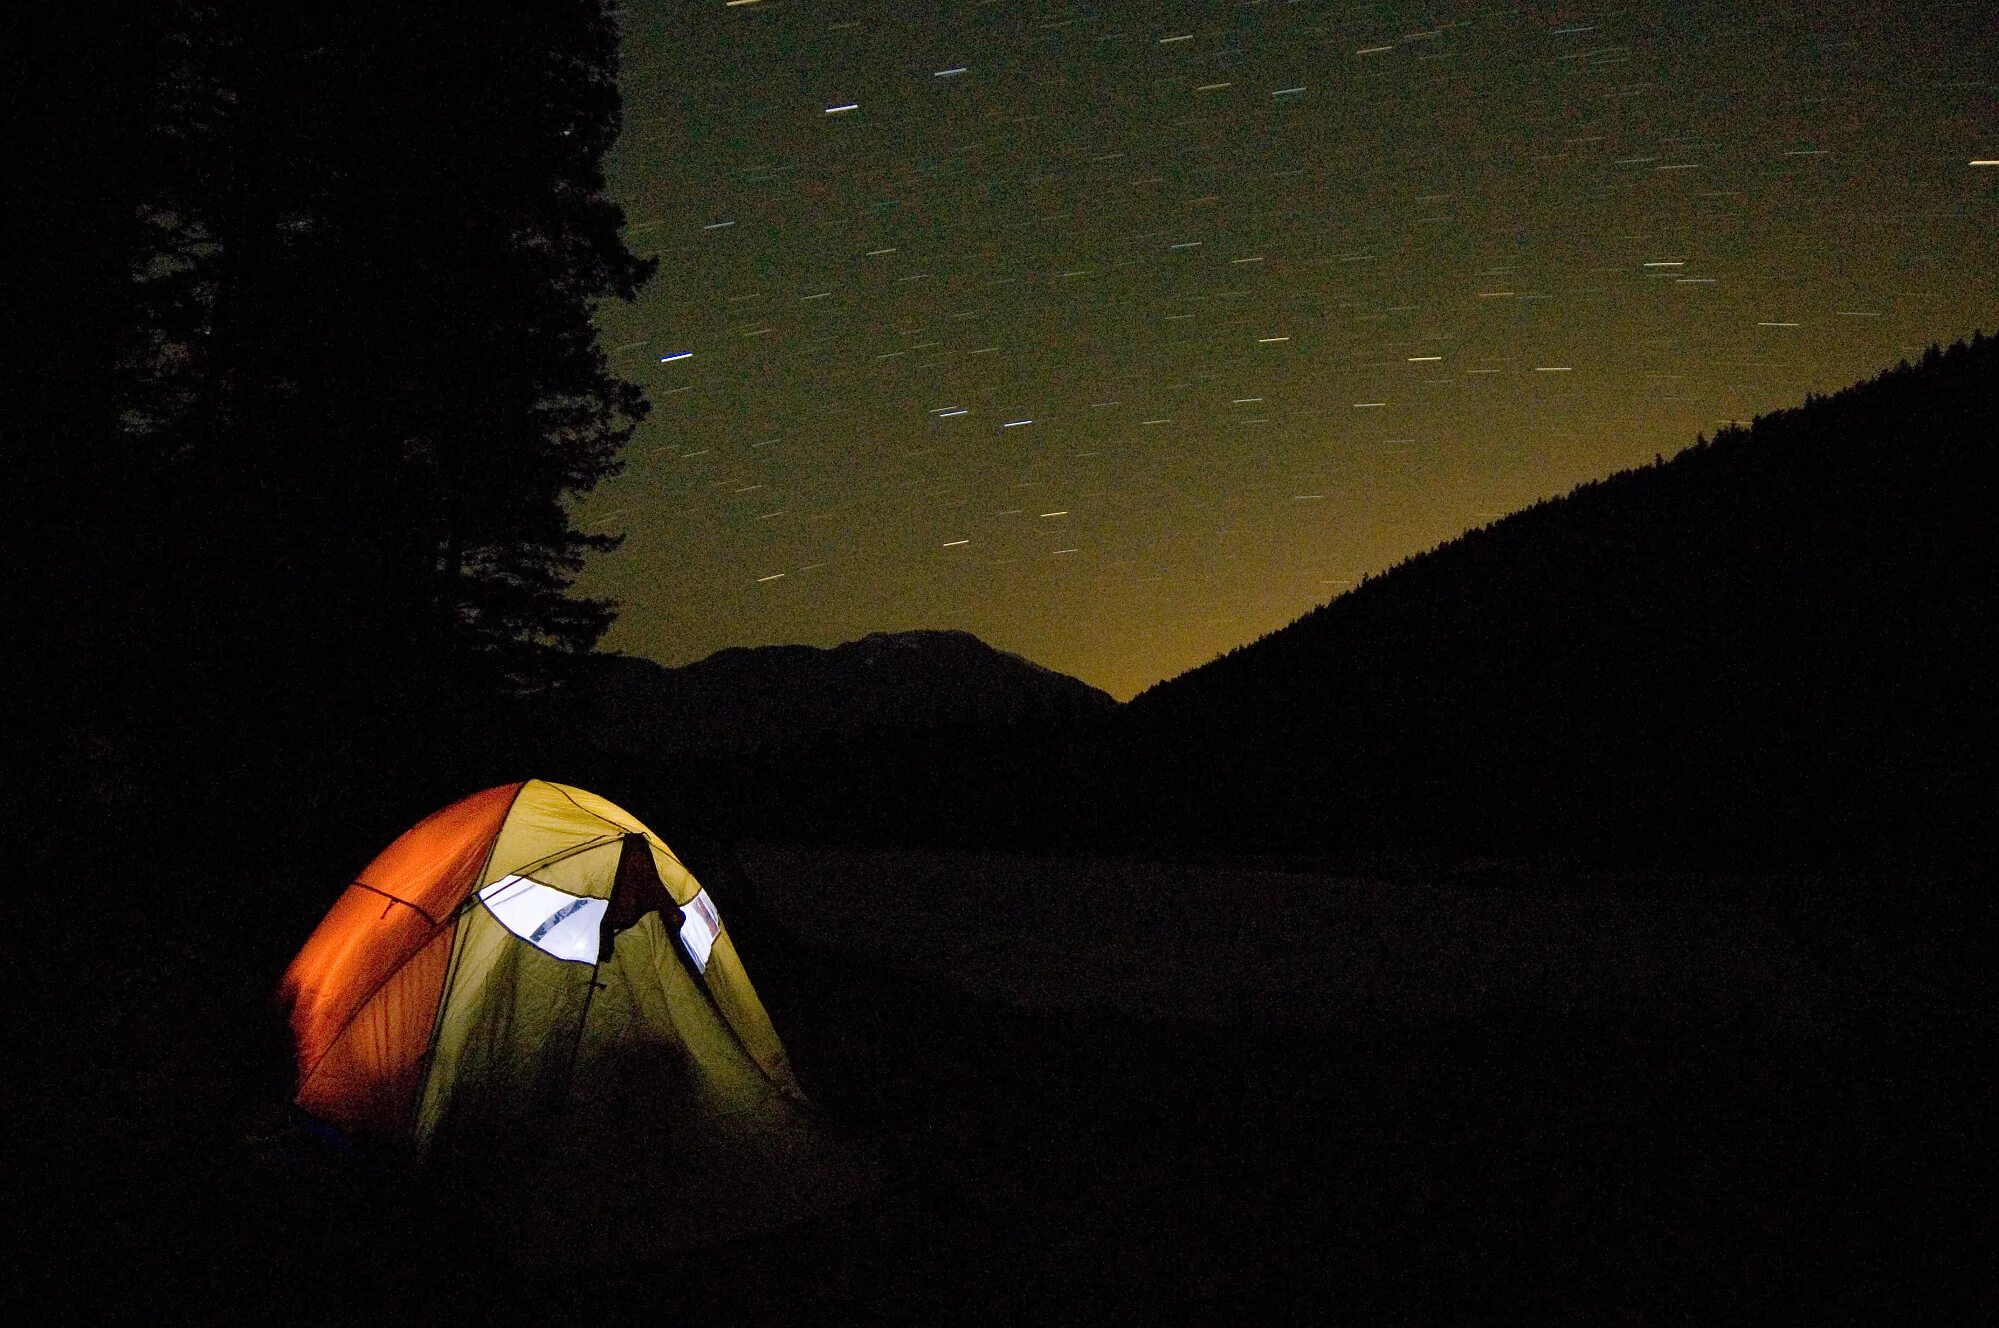 Темнота в палатке. Палатка. Палатка в лесу. Палатка ночью. Палатка в лесу ночью.